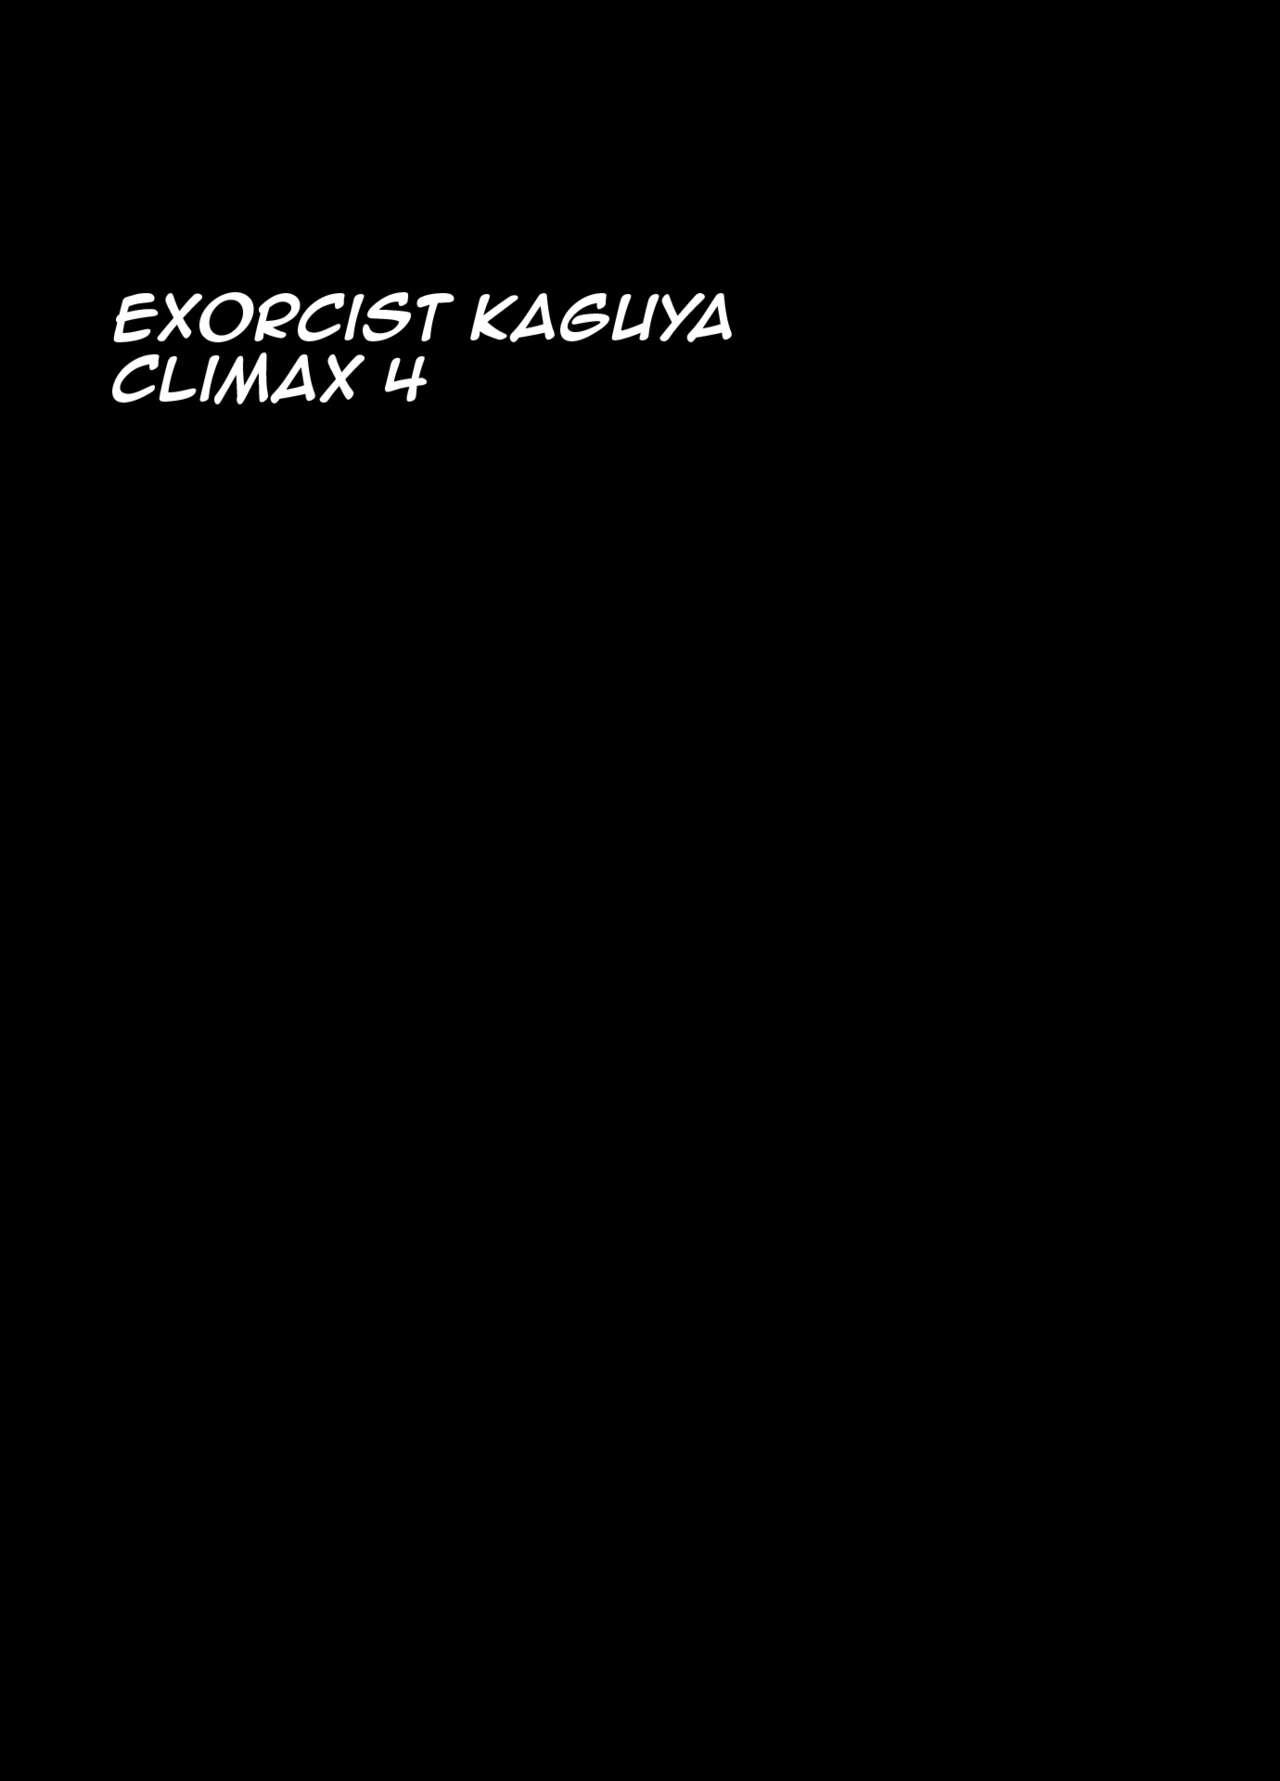 Kaguya Climax 4 12